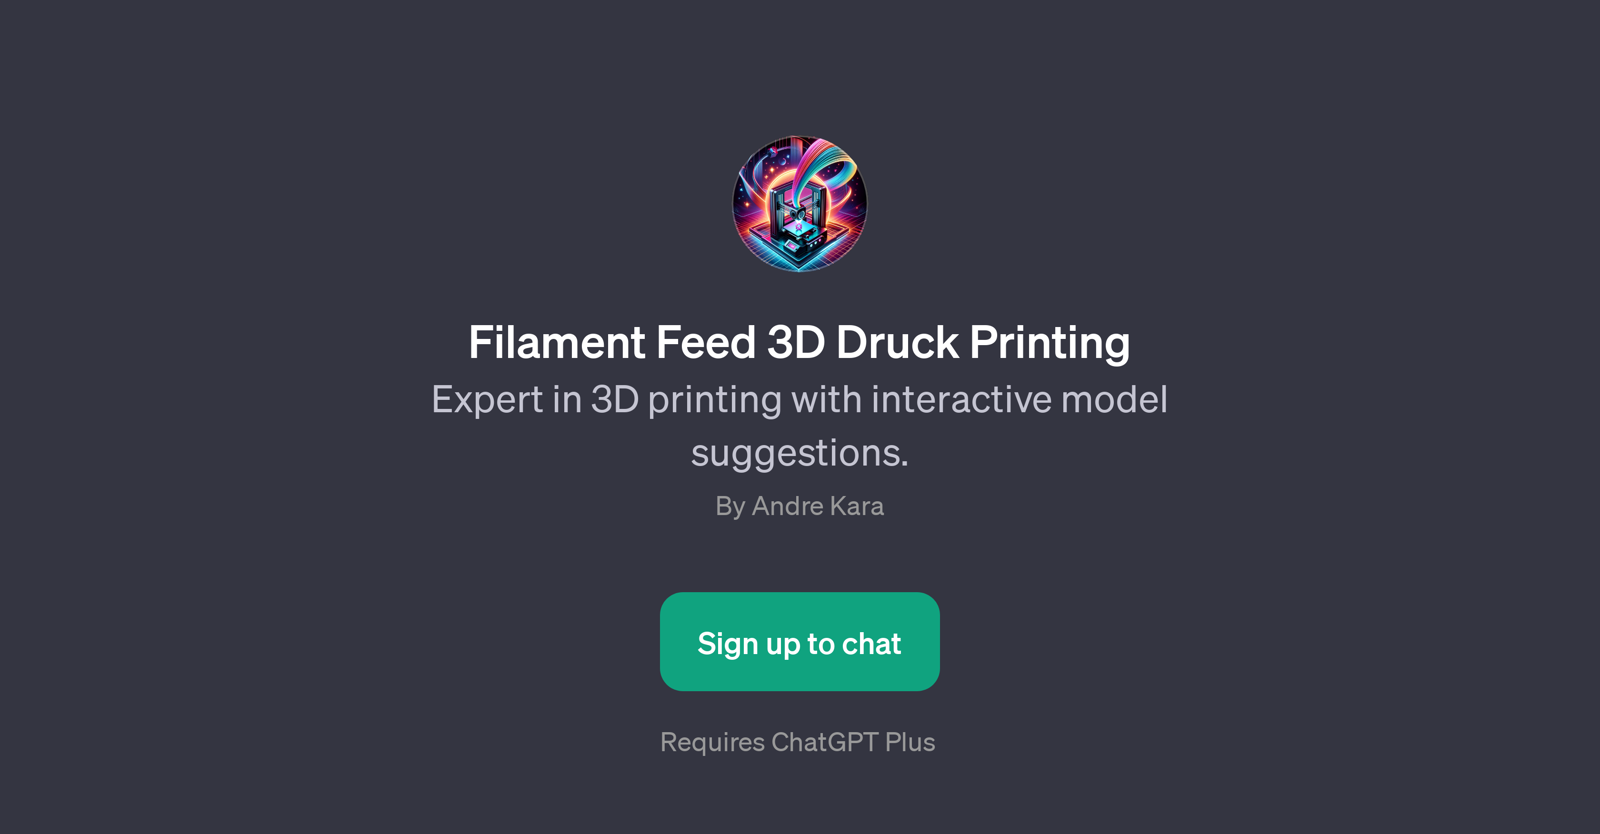 Filament Feed 3D Druck Printing website